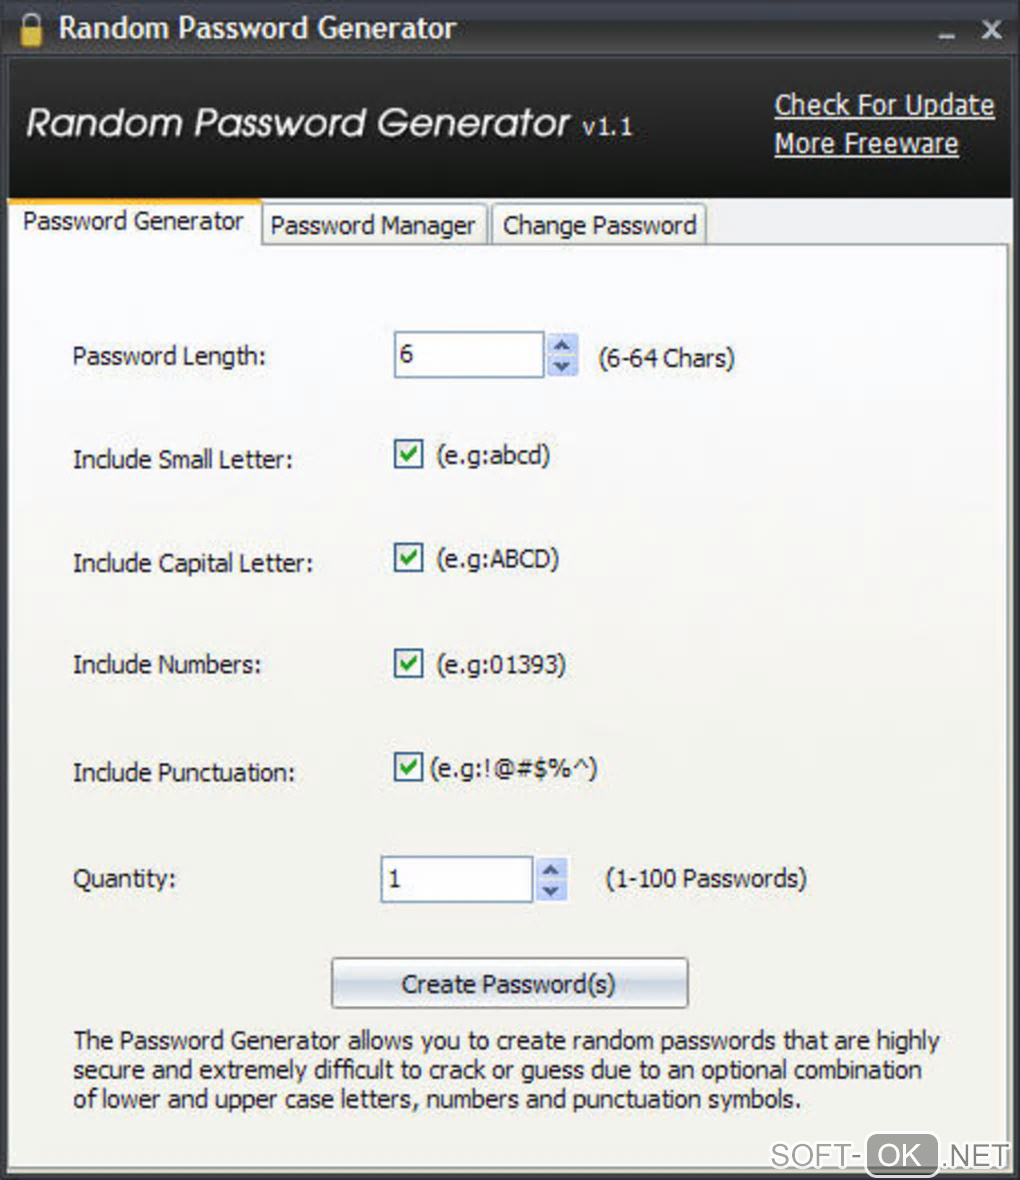 The appearance "Random Password Generator"